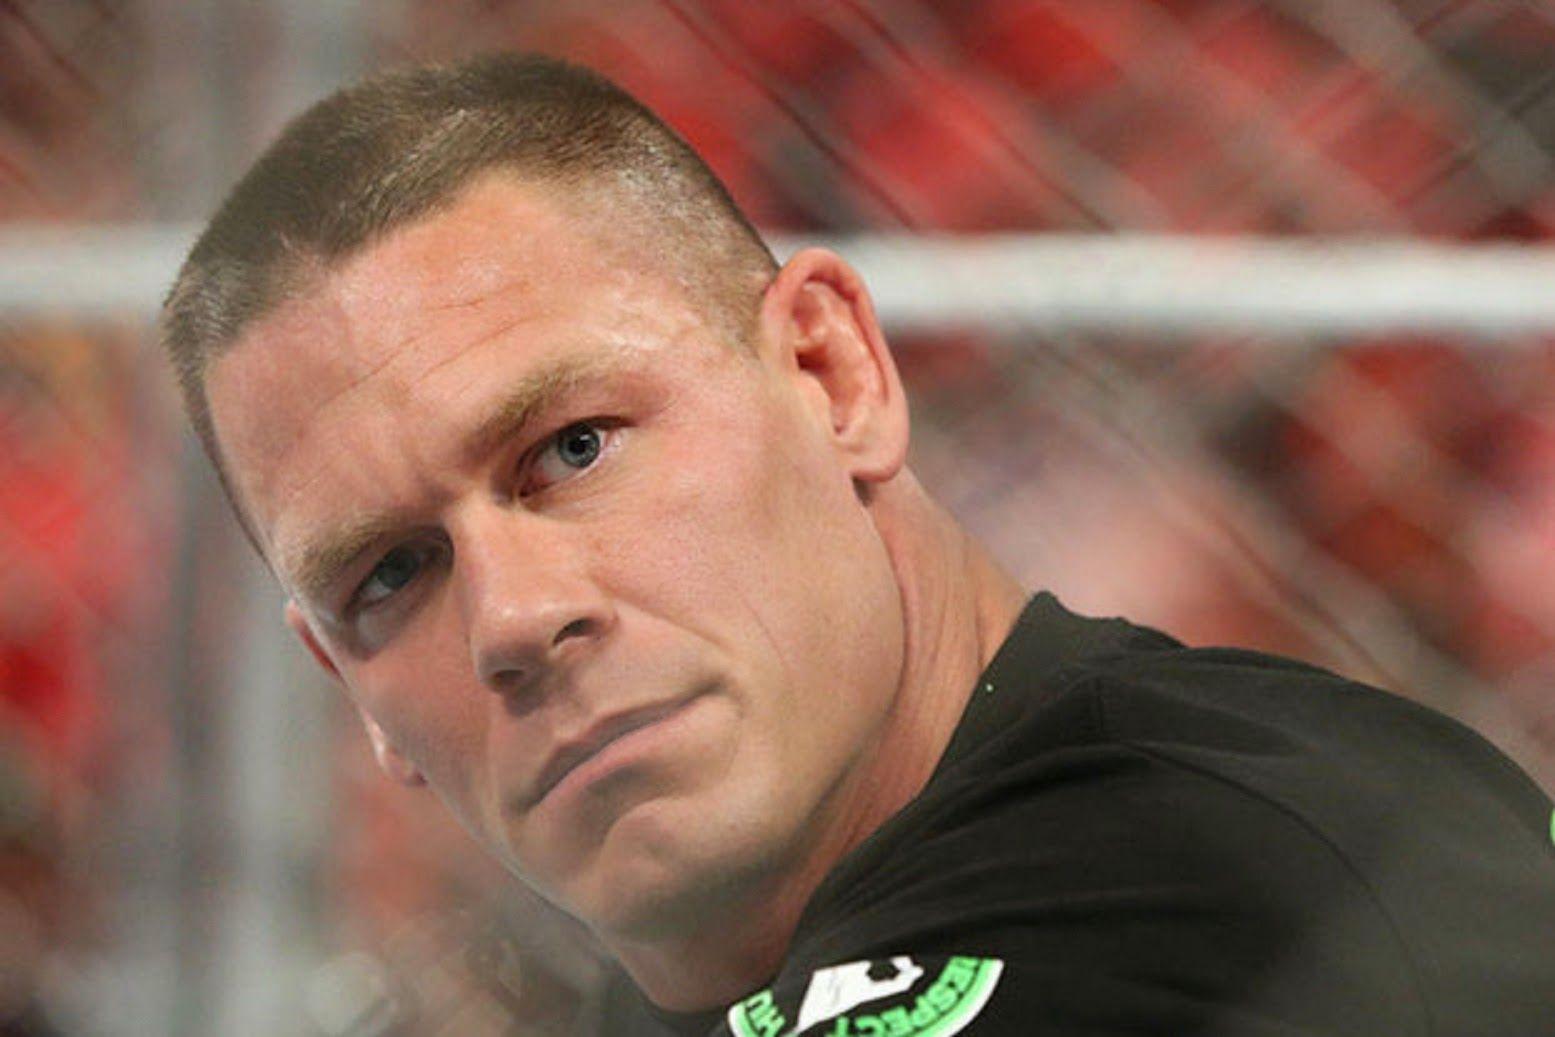 John Cena HD Free Wallpaper. WWE HD WALLPAPER FREE DOWNLOAD